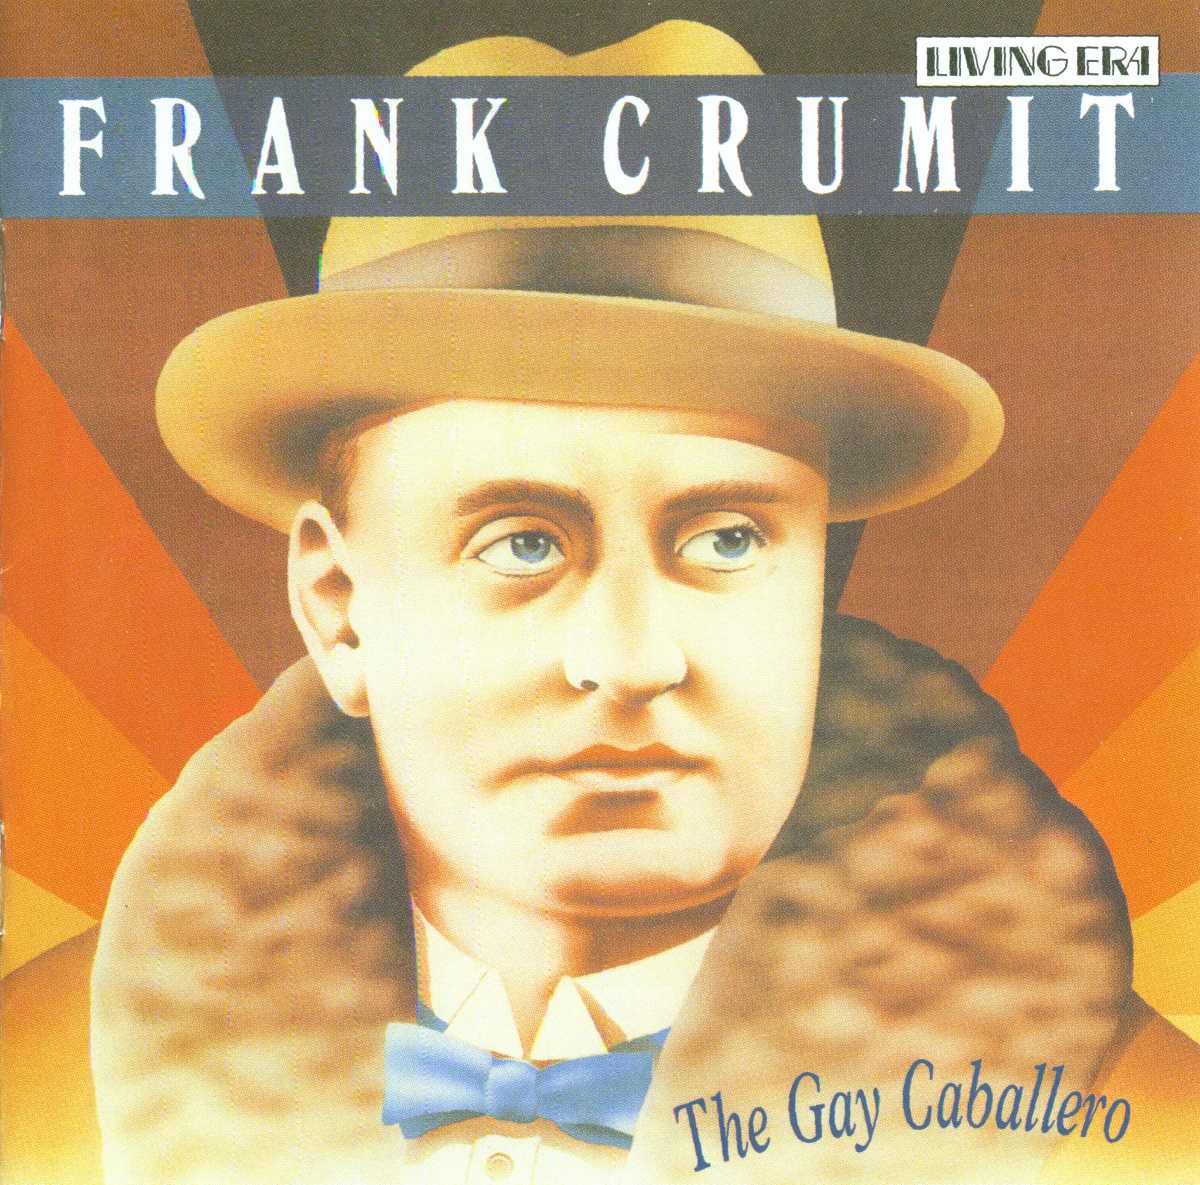 Frank Crumit